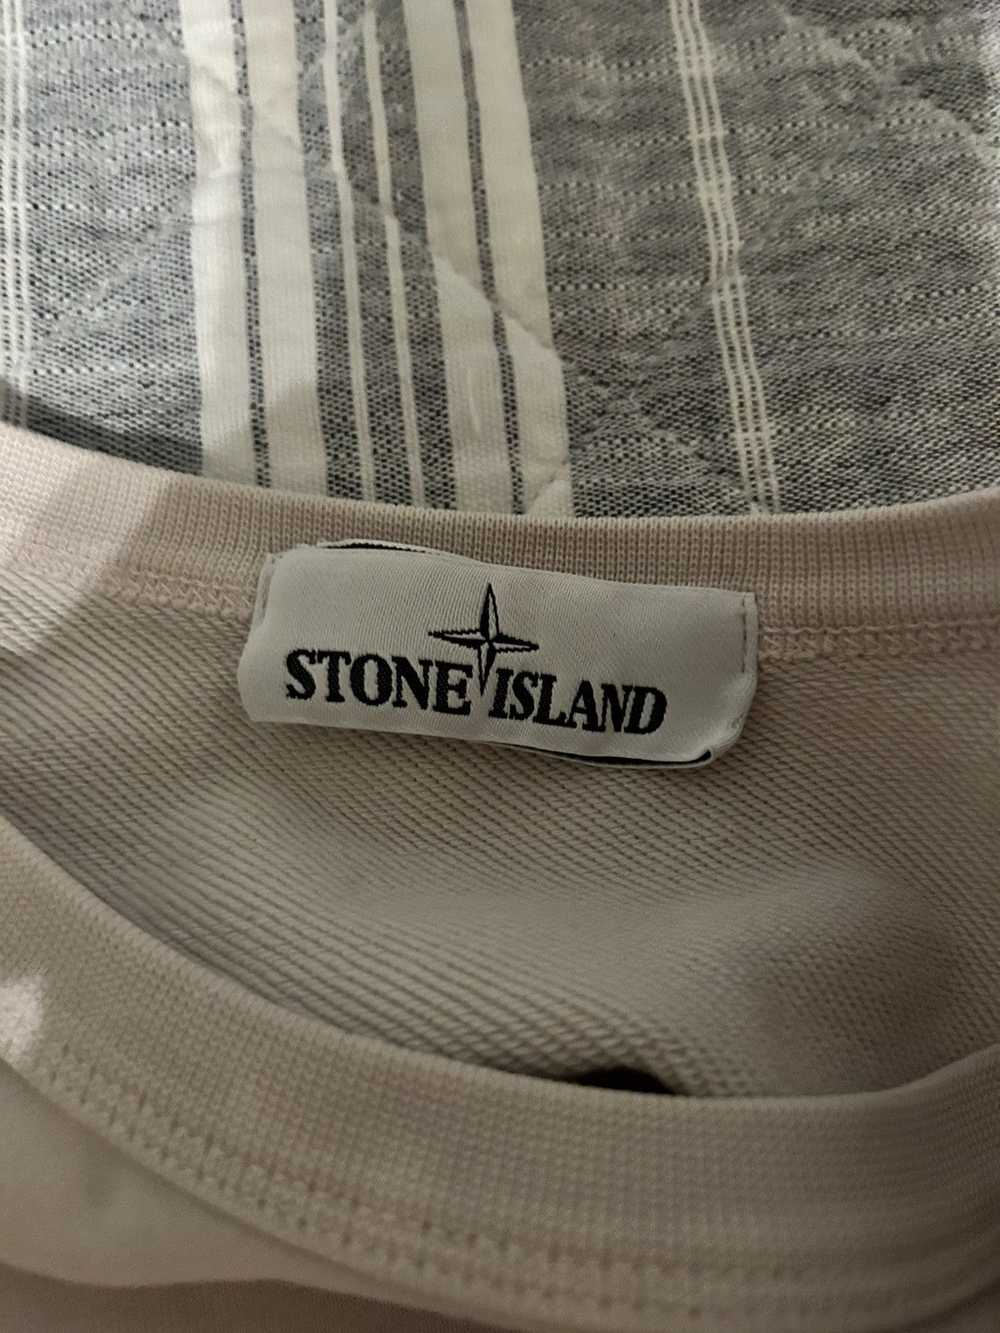 Stone Island Stone Island Cream Sweater / Crewneck - image 3